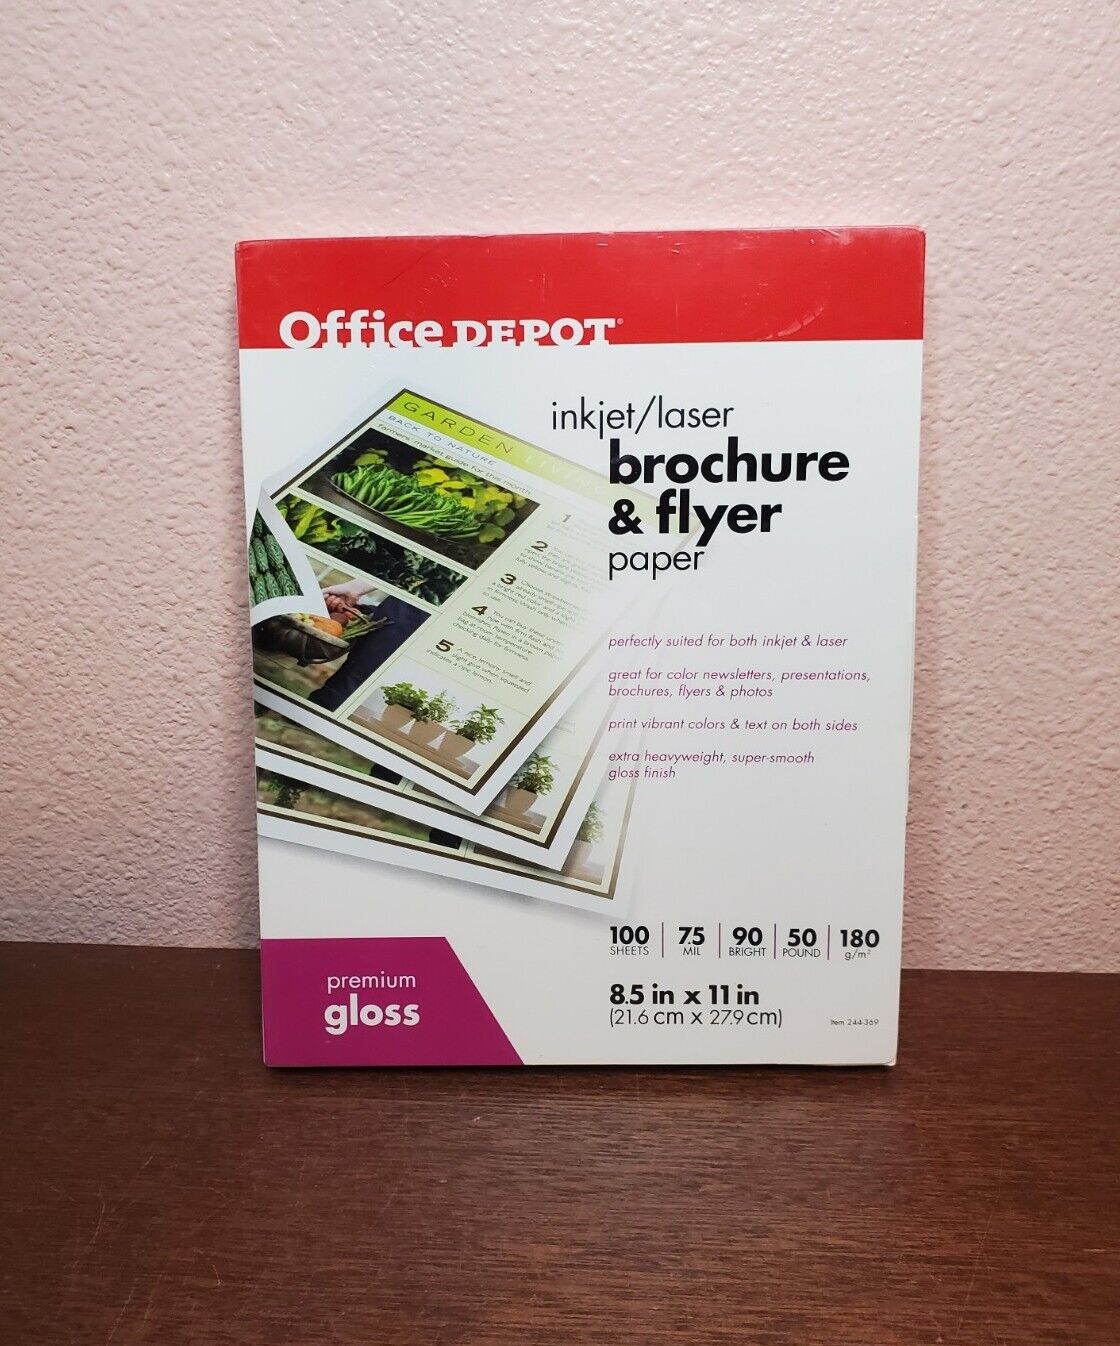 Office Depot Glossy Premium Gloss Brochure & Flyer Paper Inkjet/Laser 100 Sheets